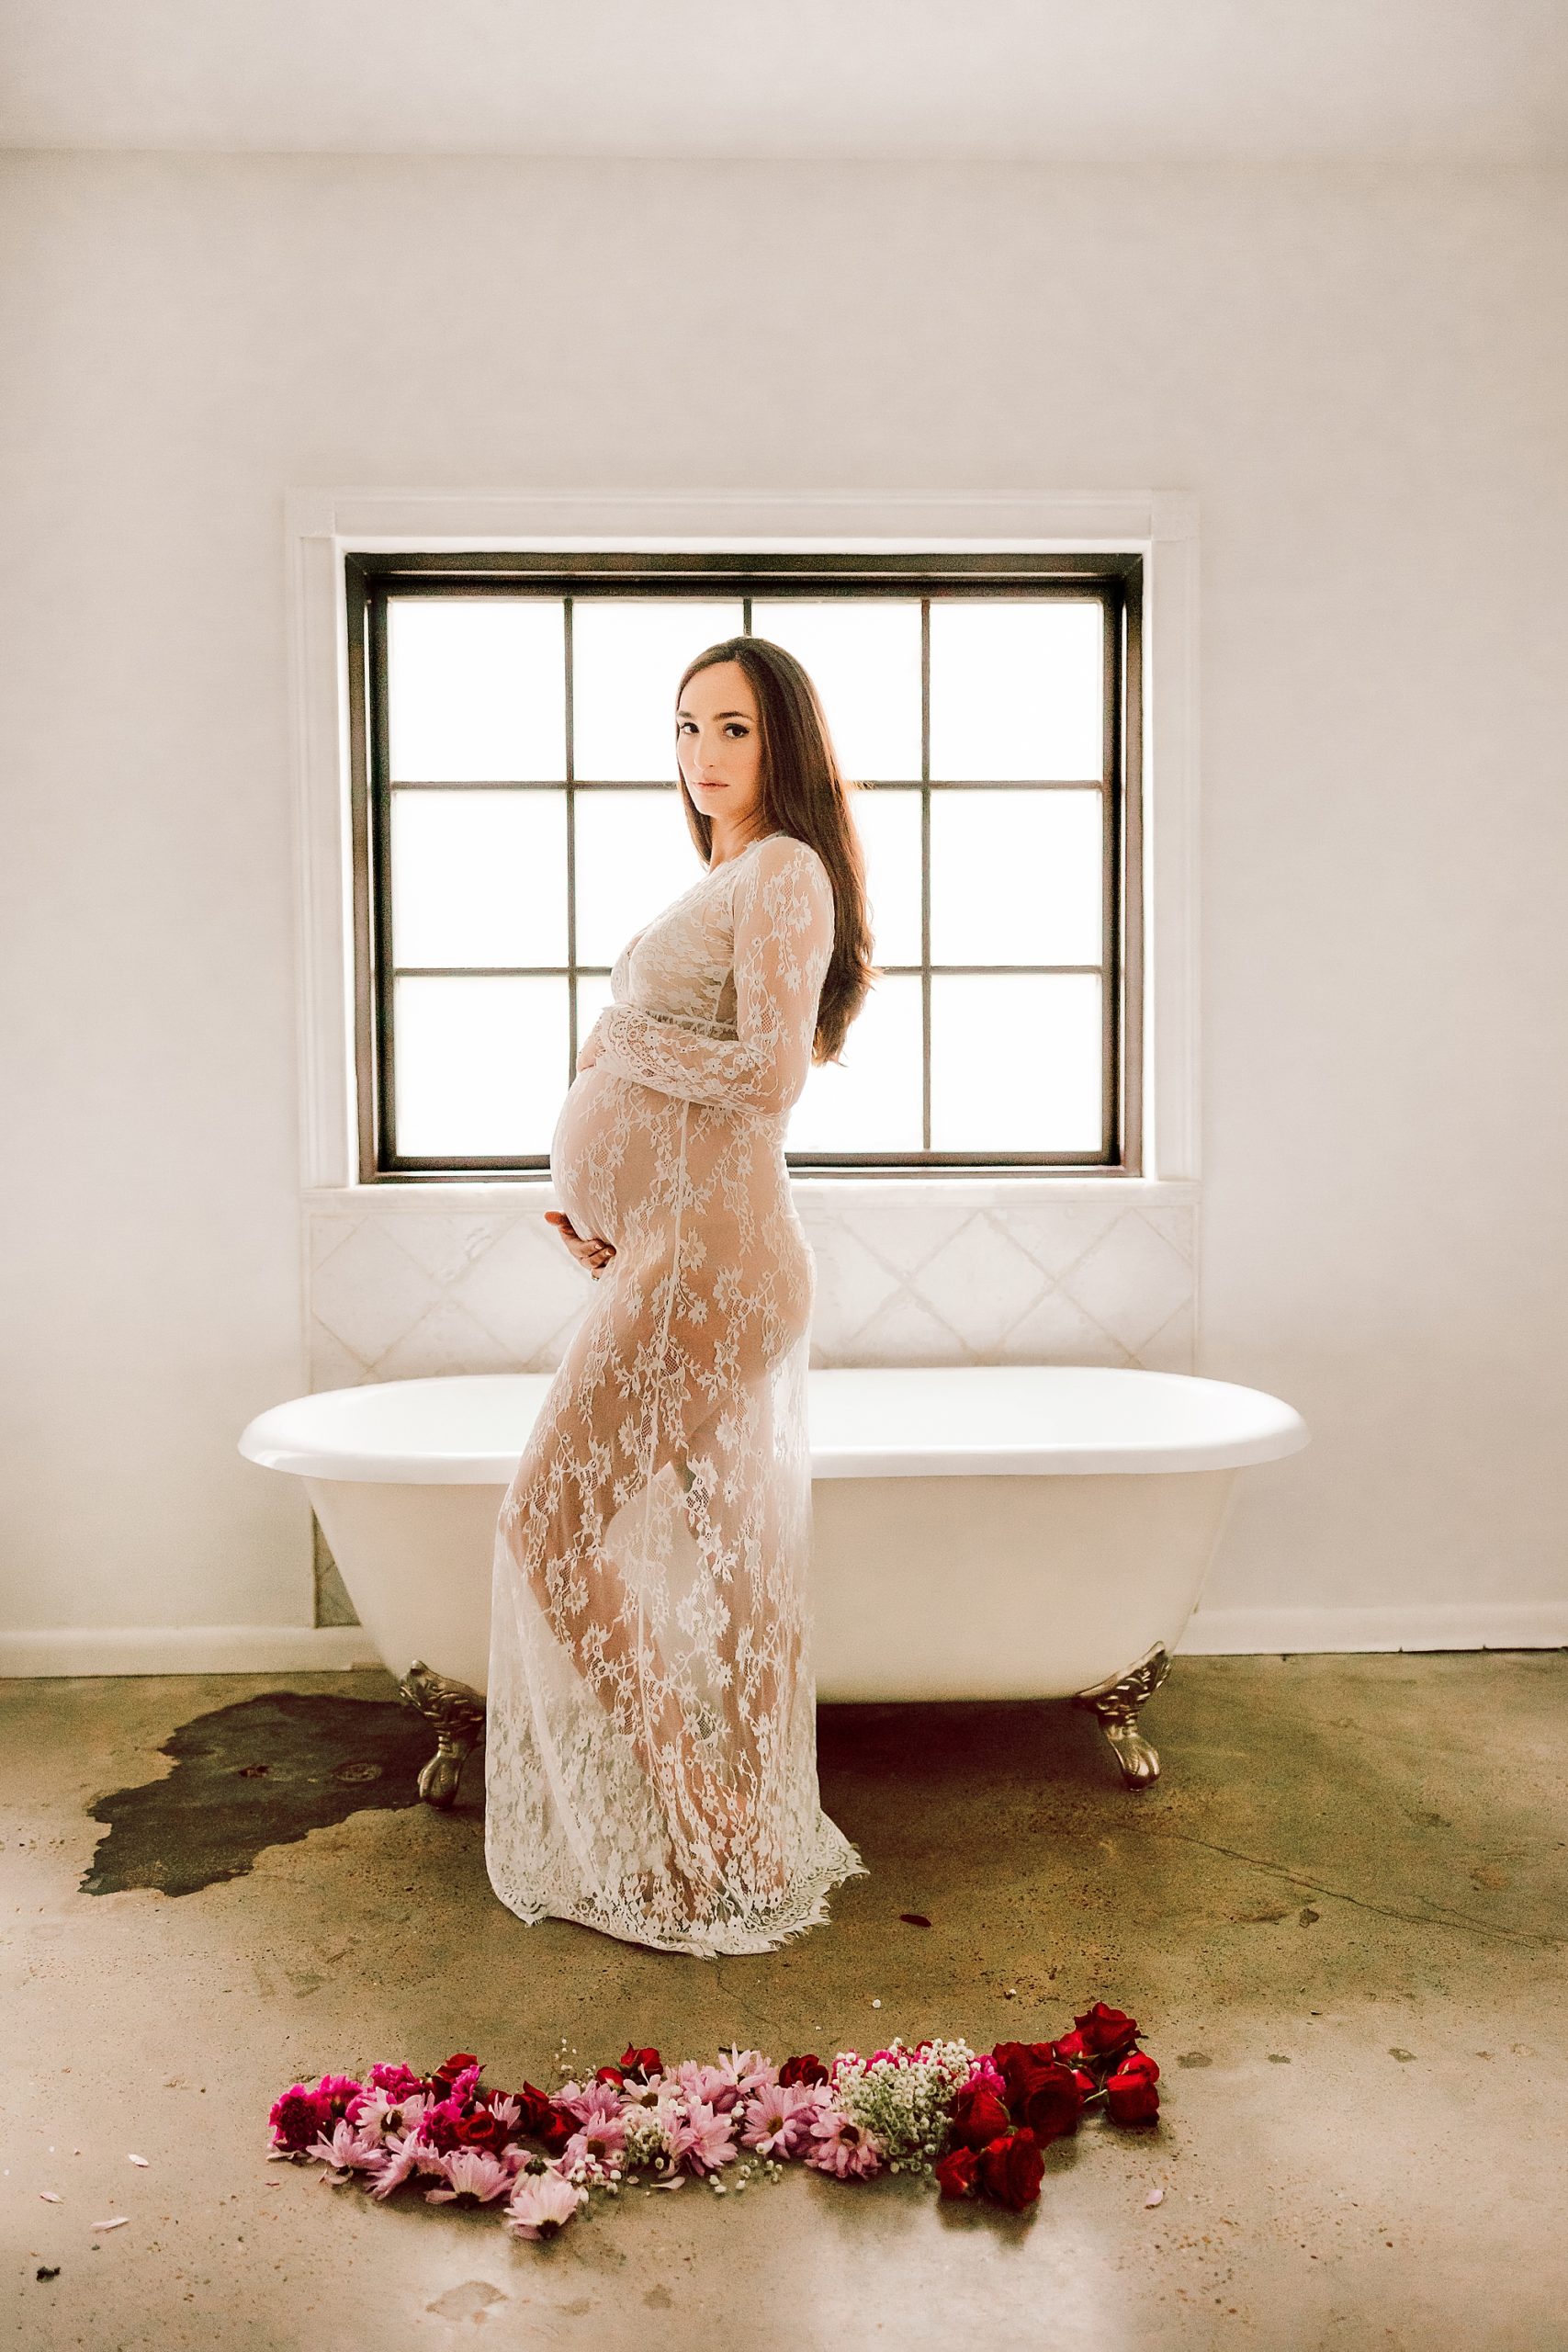 Houston maternity photographer Dazzling Diva Photography